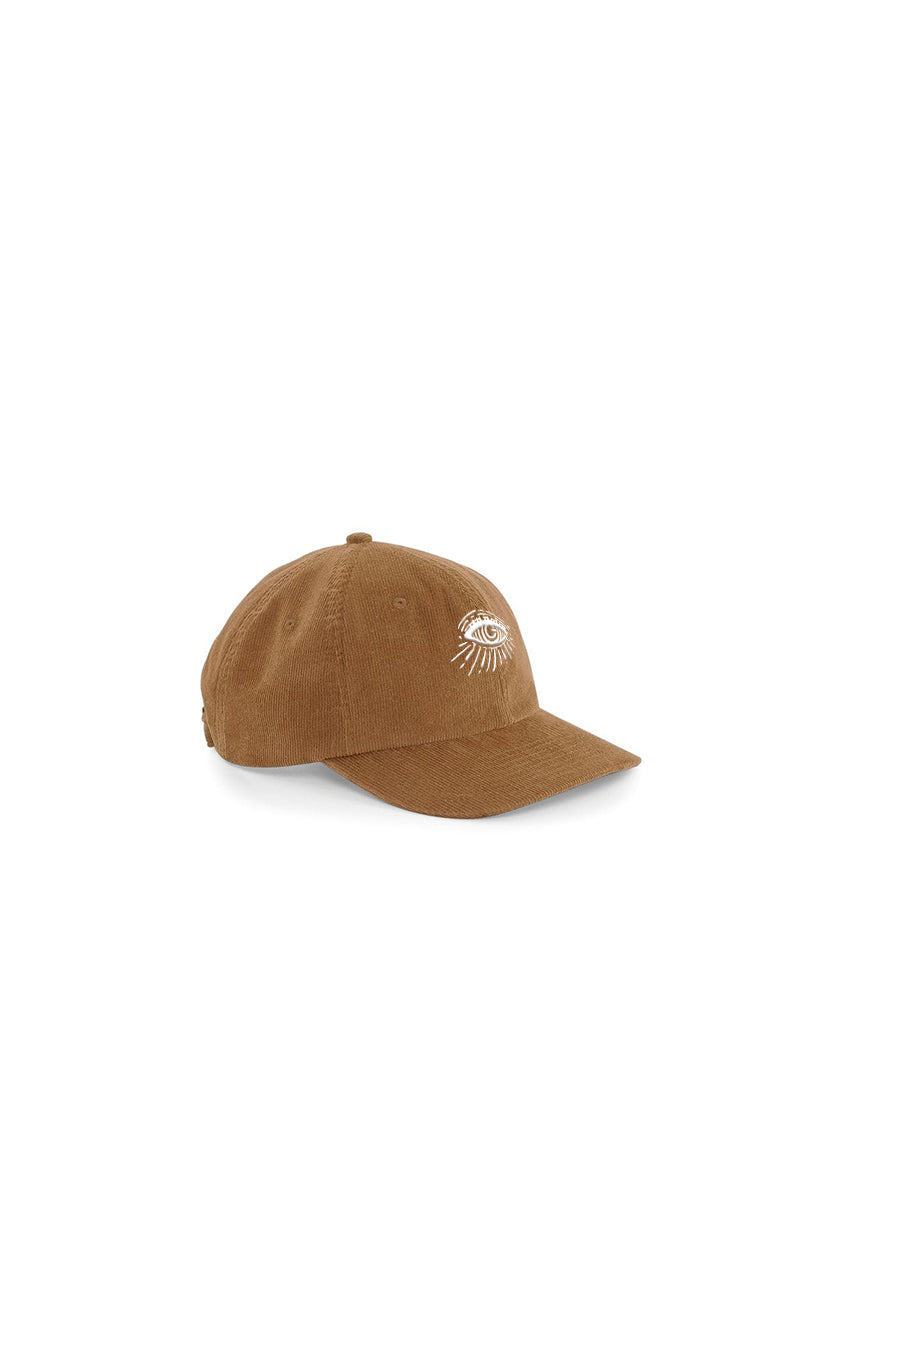 Heritage - Velvet cap